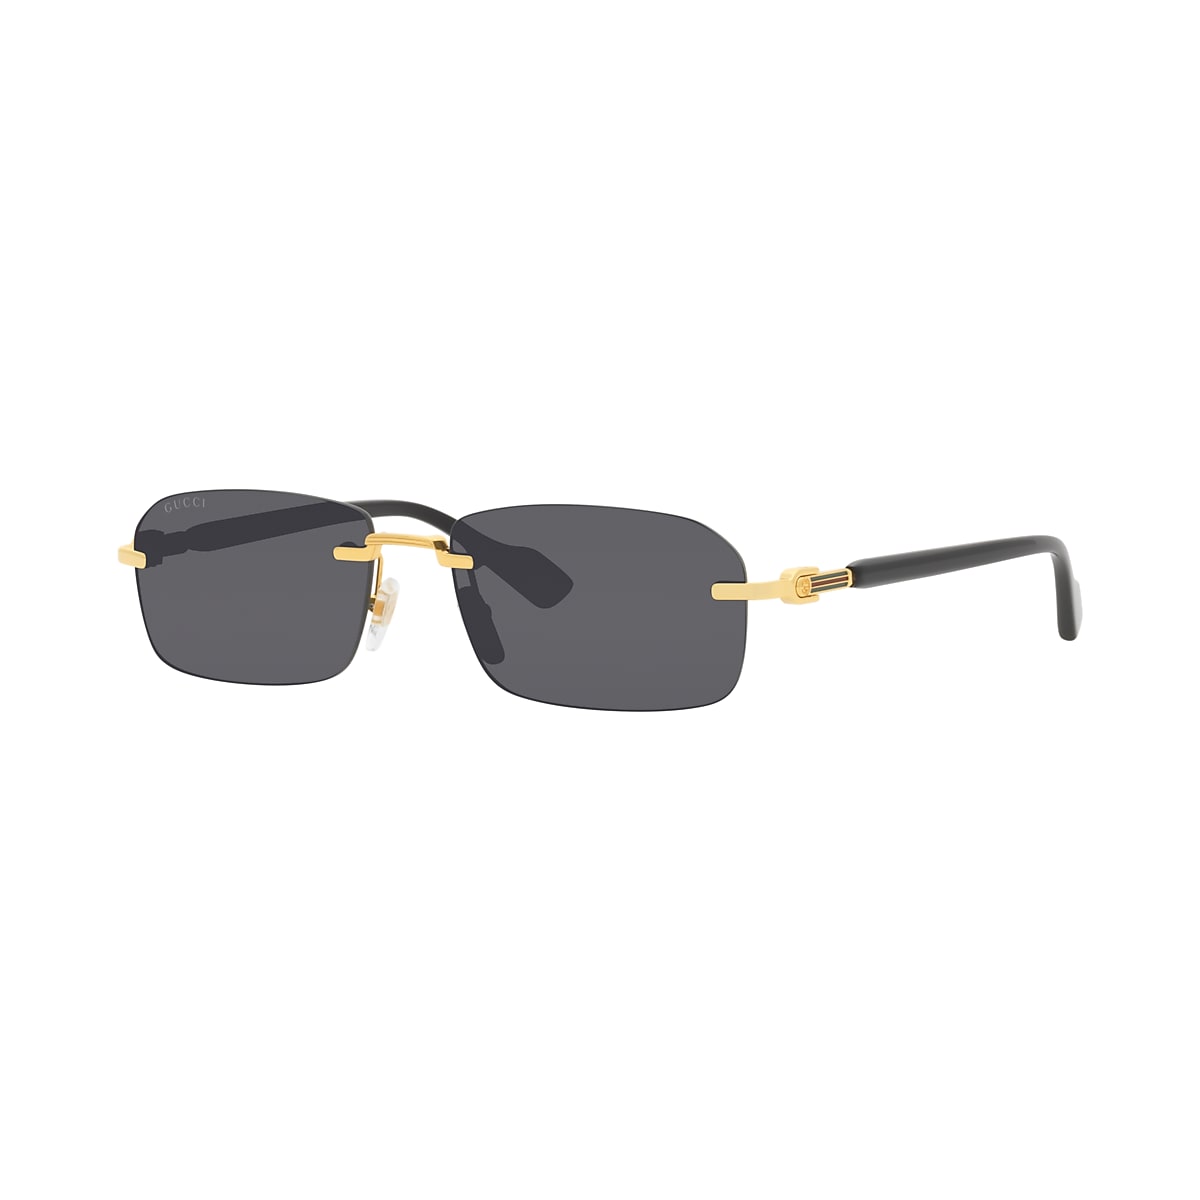 Gucci GG1221S 56 Grey & Gold Sunglasses | Sunglass Hut USA